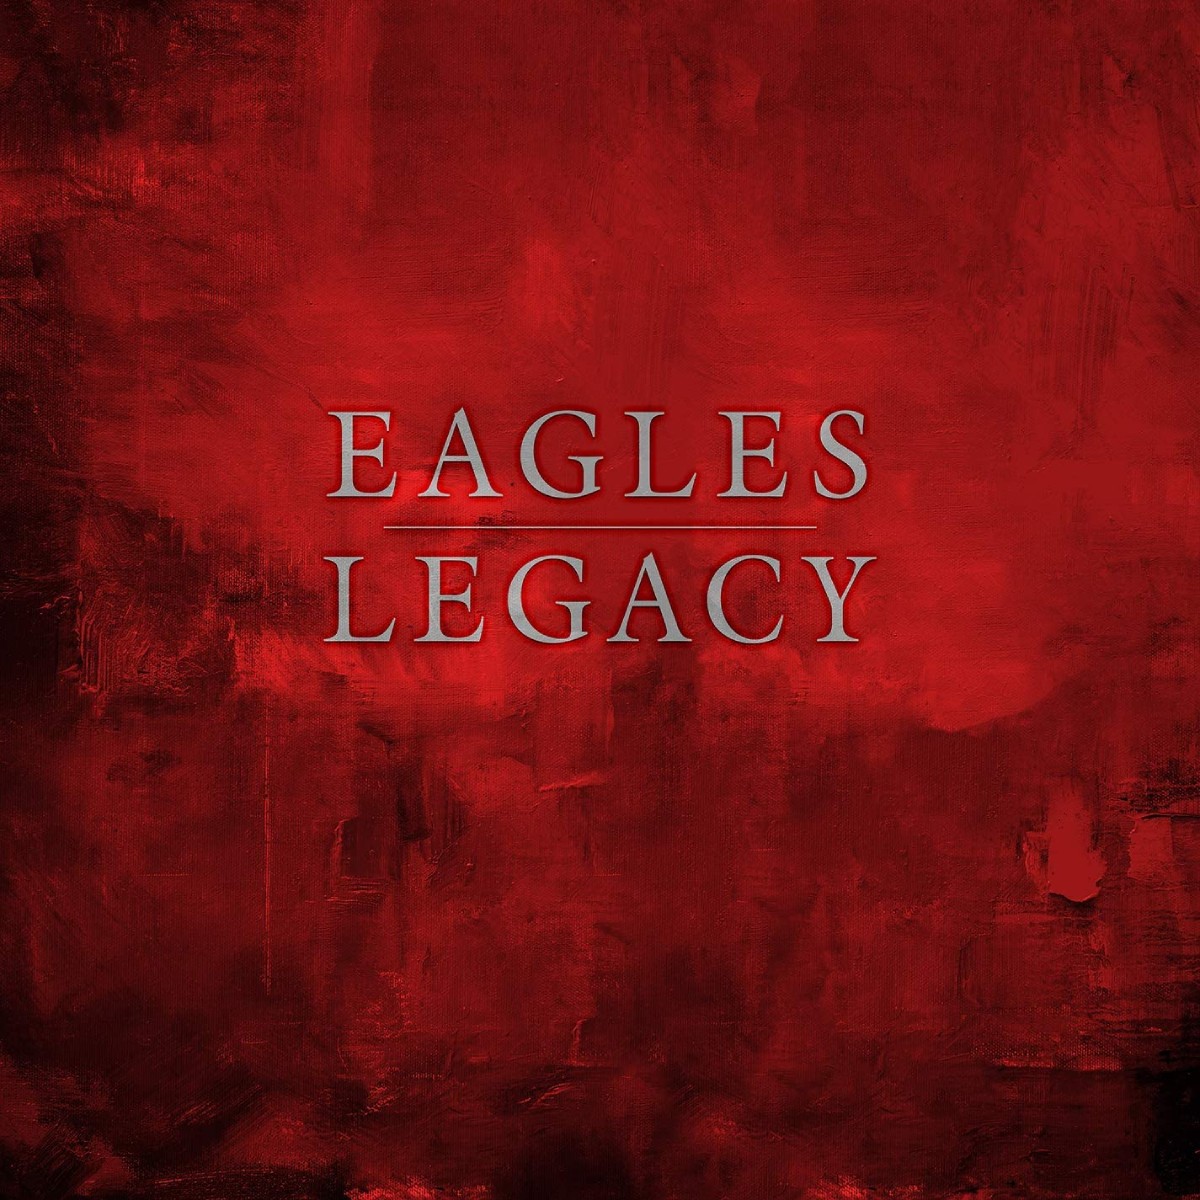 The Eagles, альбом «Legacy»